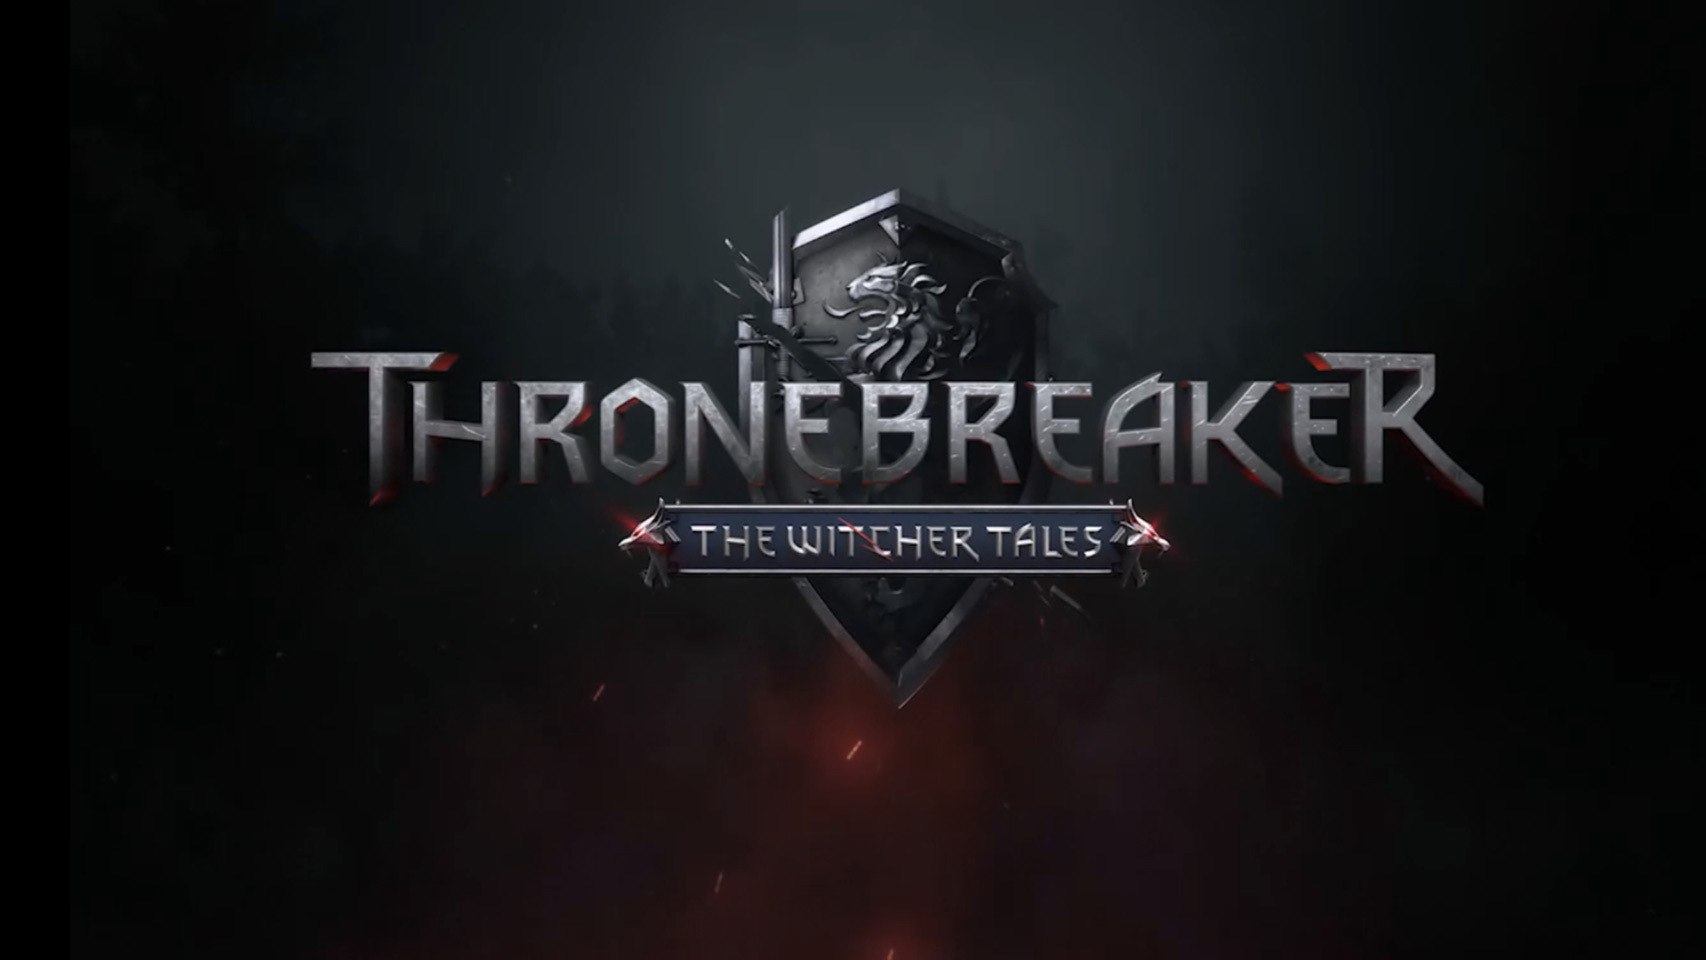 The Witcher Tales: Thronebreaker